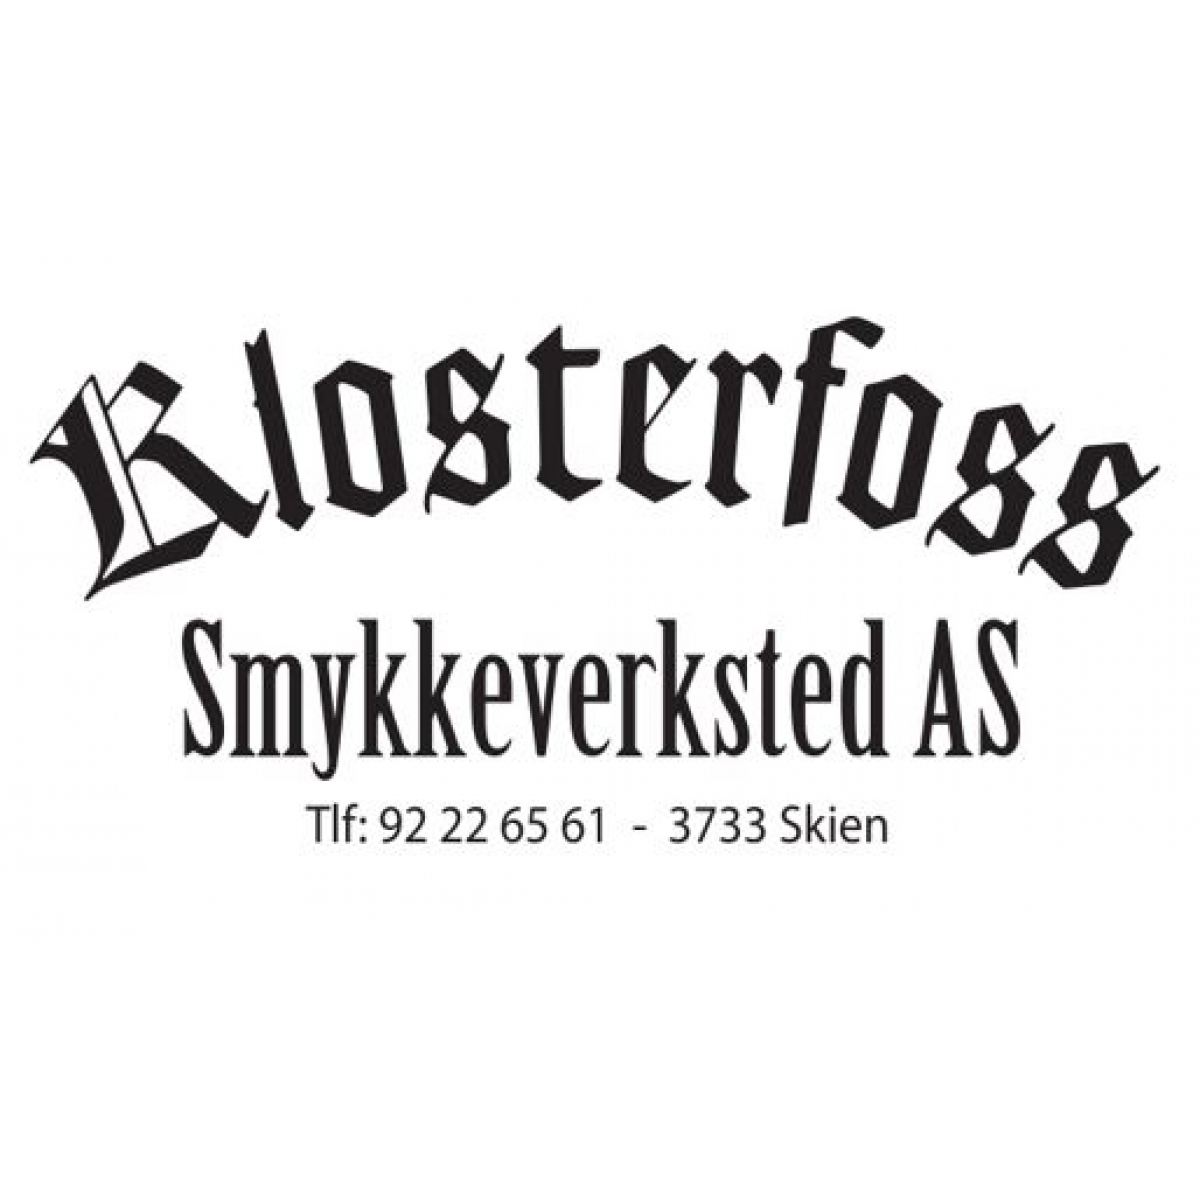 Joytag - Klosterfoss Smykkeverksted A/S